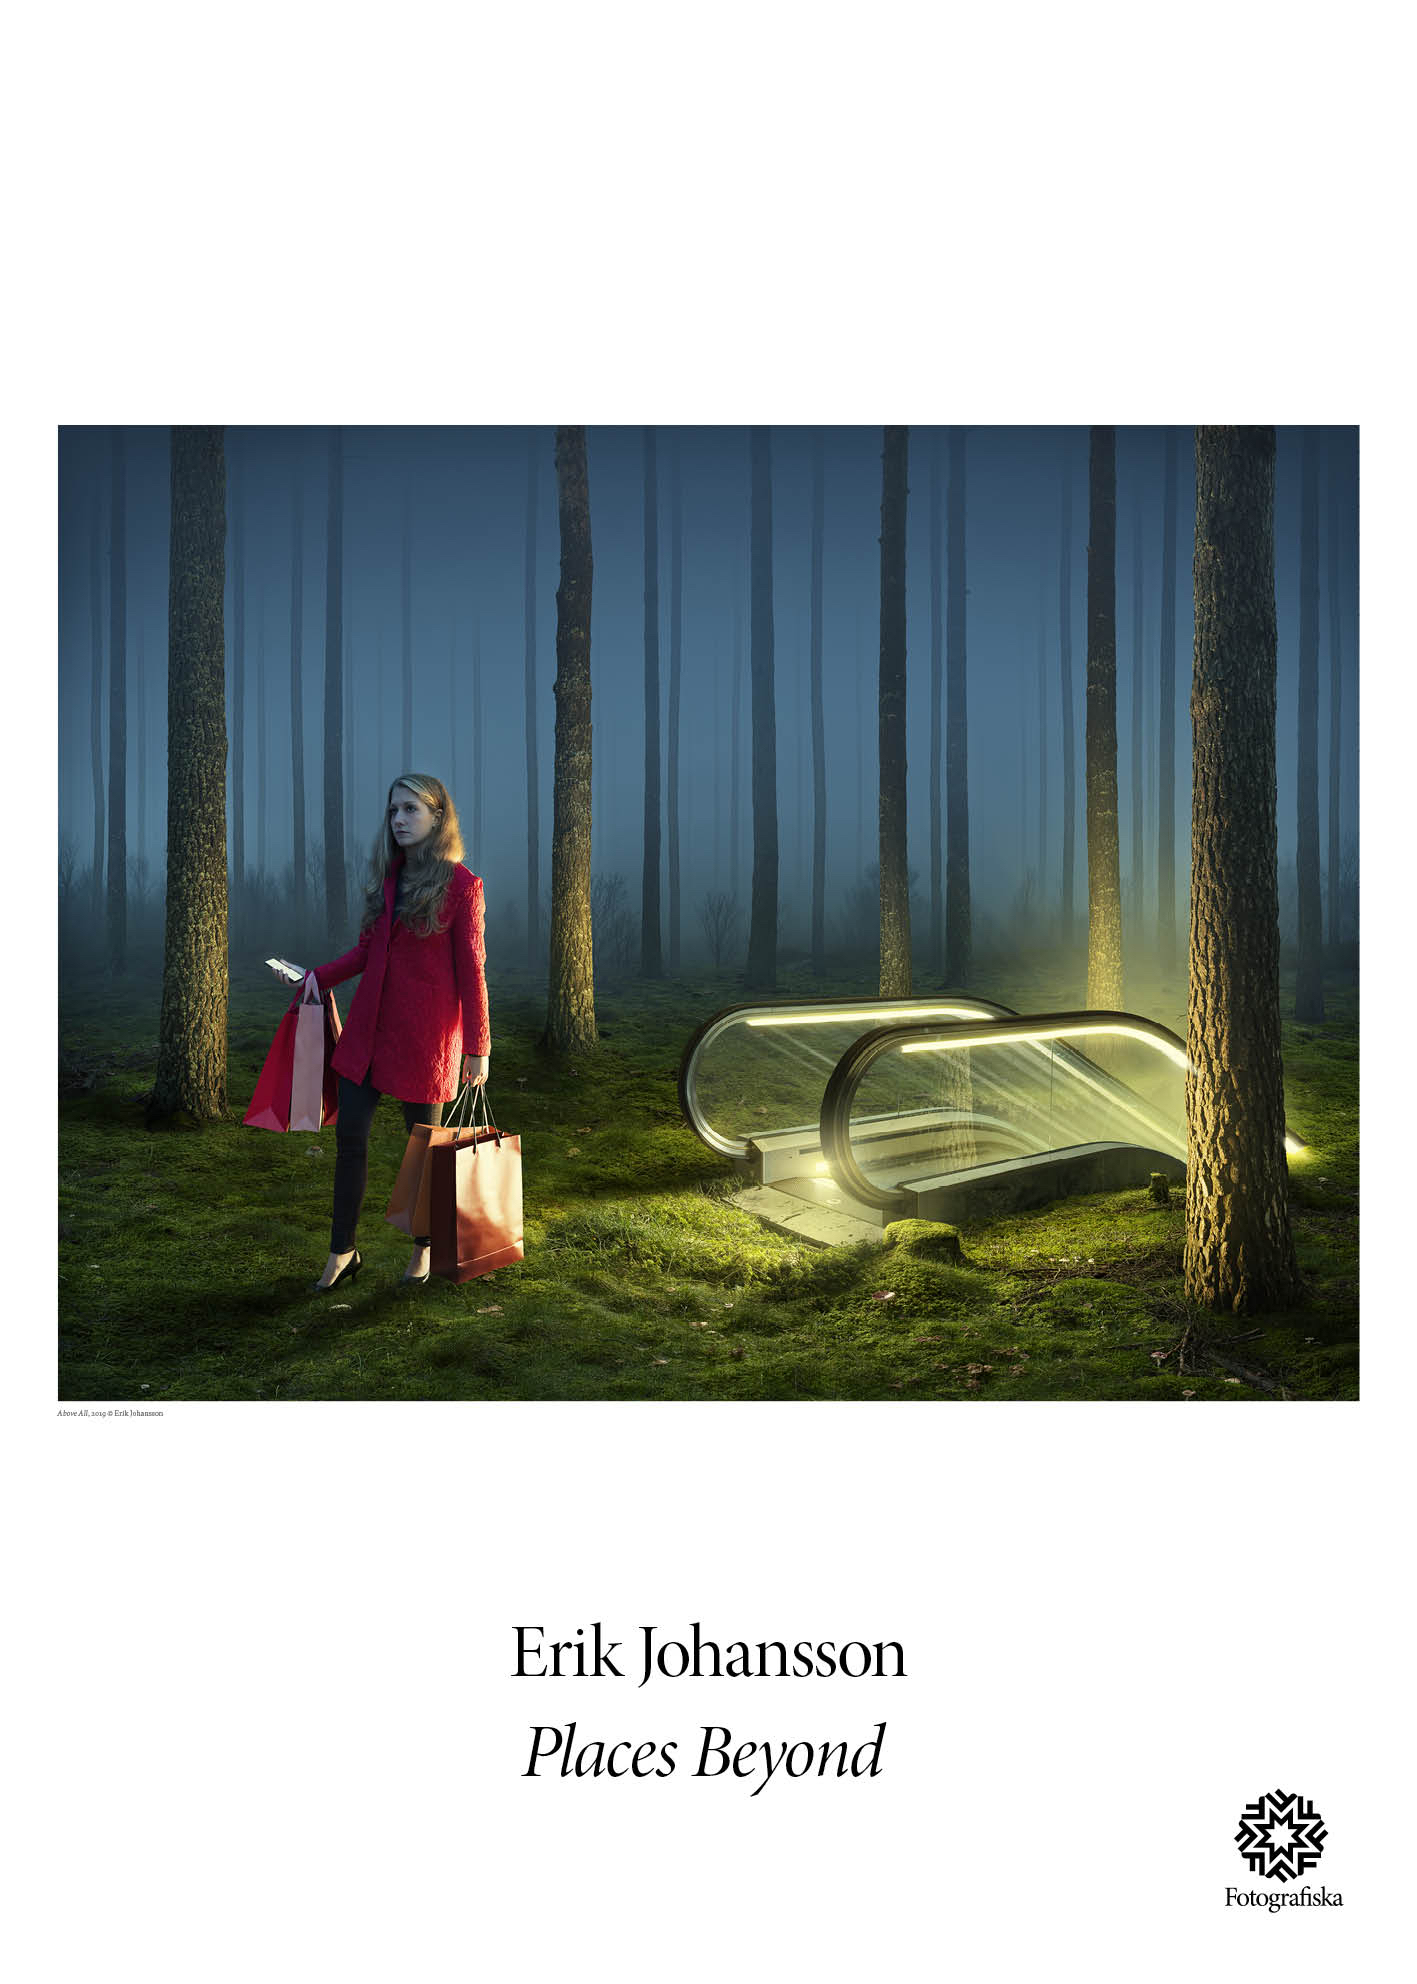 Erik Johansson, Above All #6375